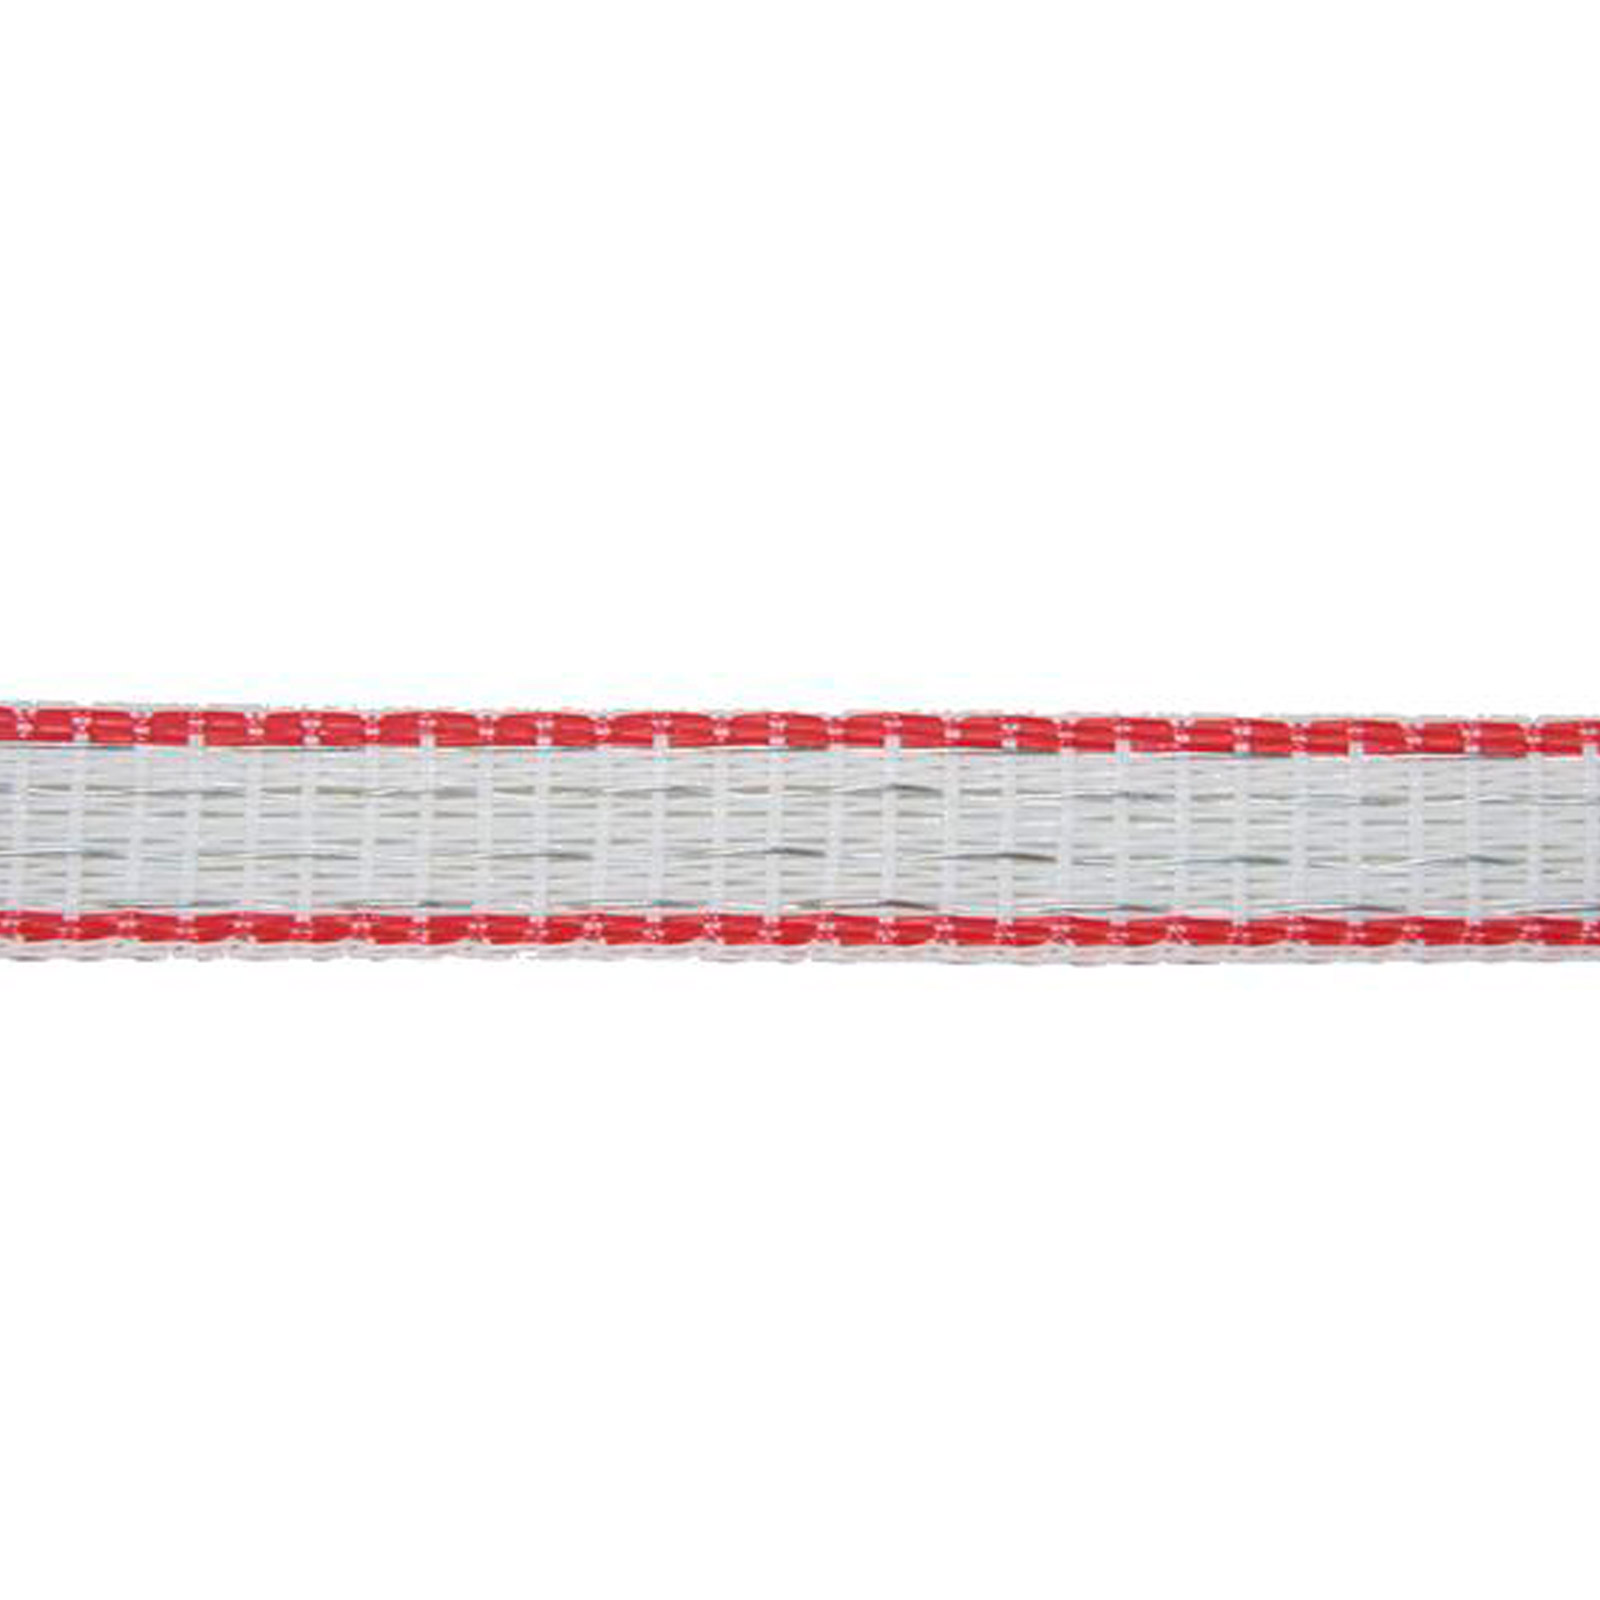 Agrarzone villanypásztor szalag Premium 0.30 TriCOND, fehér-piros 200 m x 12 mm